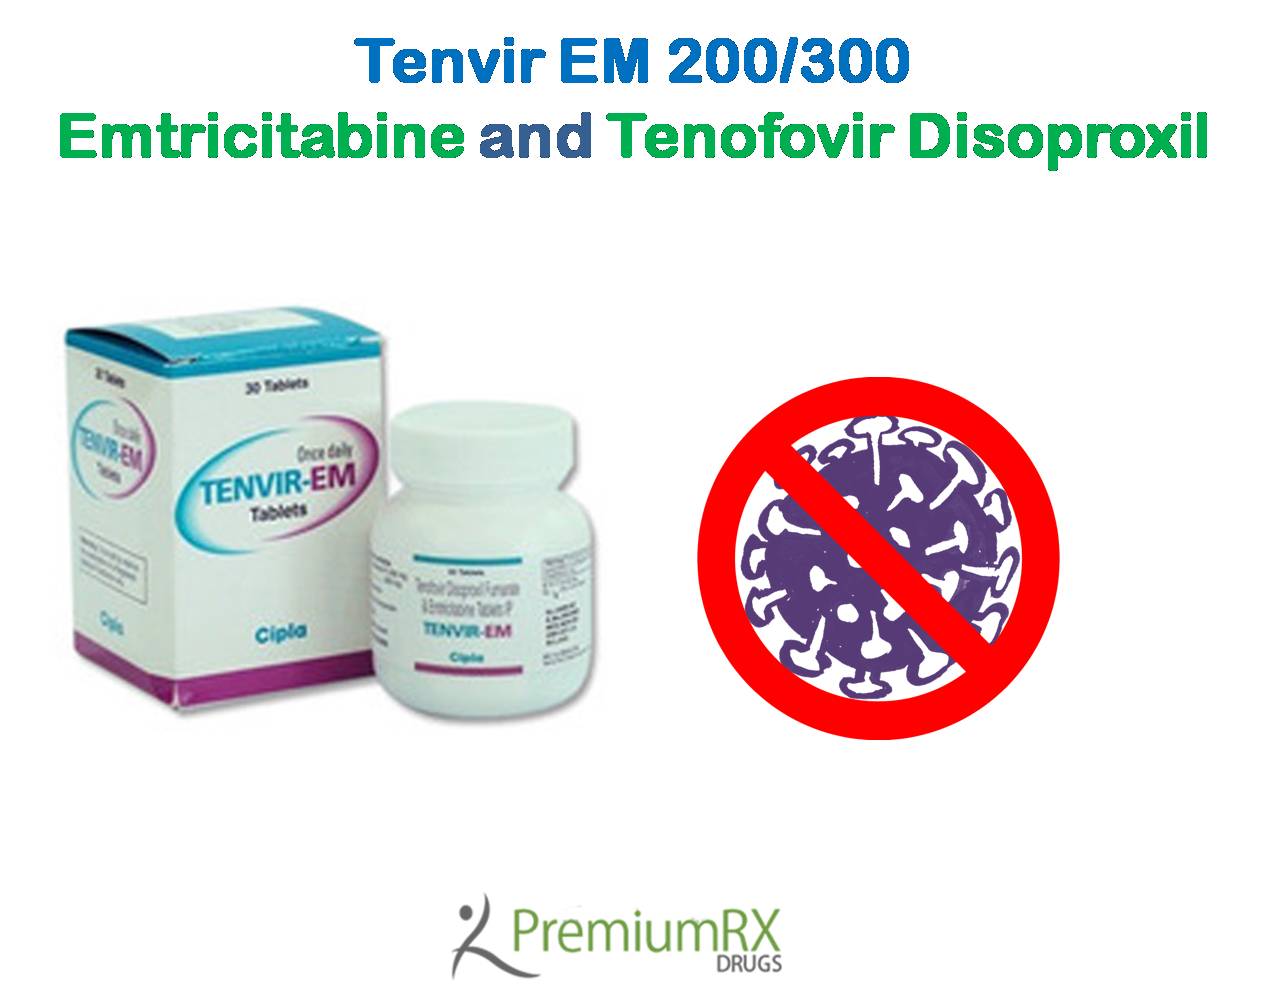 Emtricitabine and Tenofovir Disoproxil